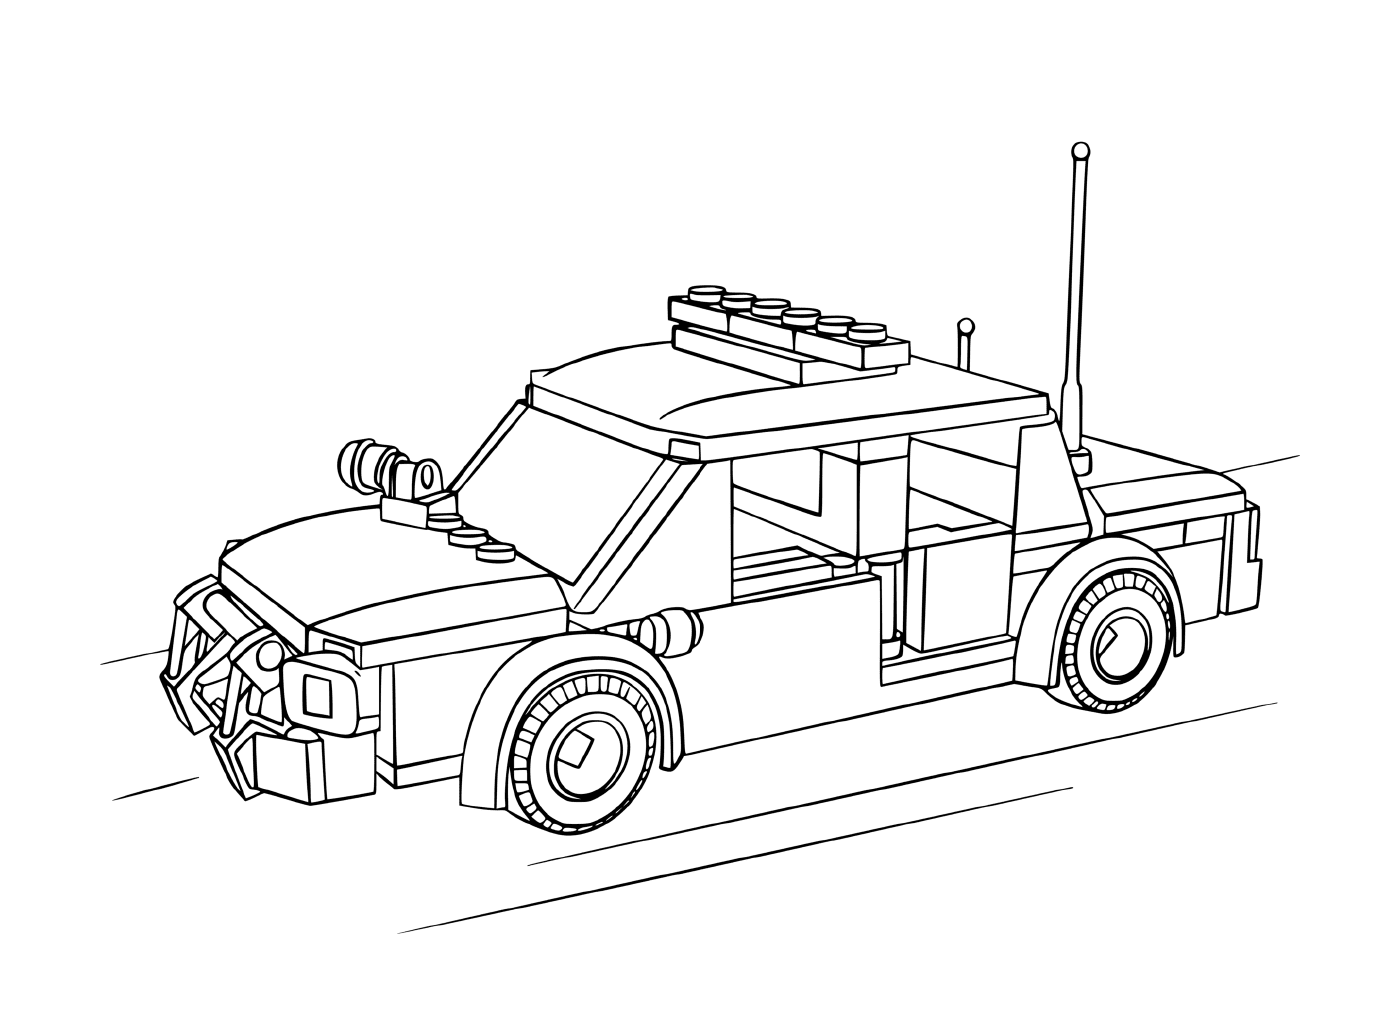  Police Lego Vehicle 